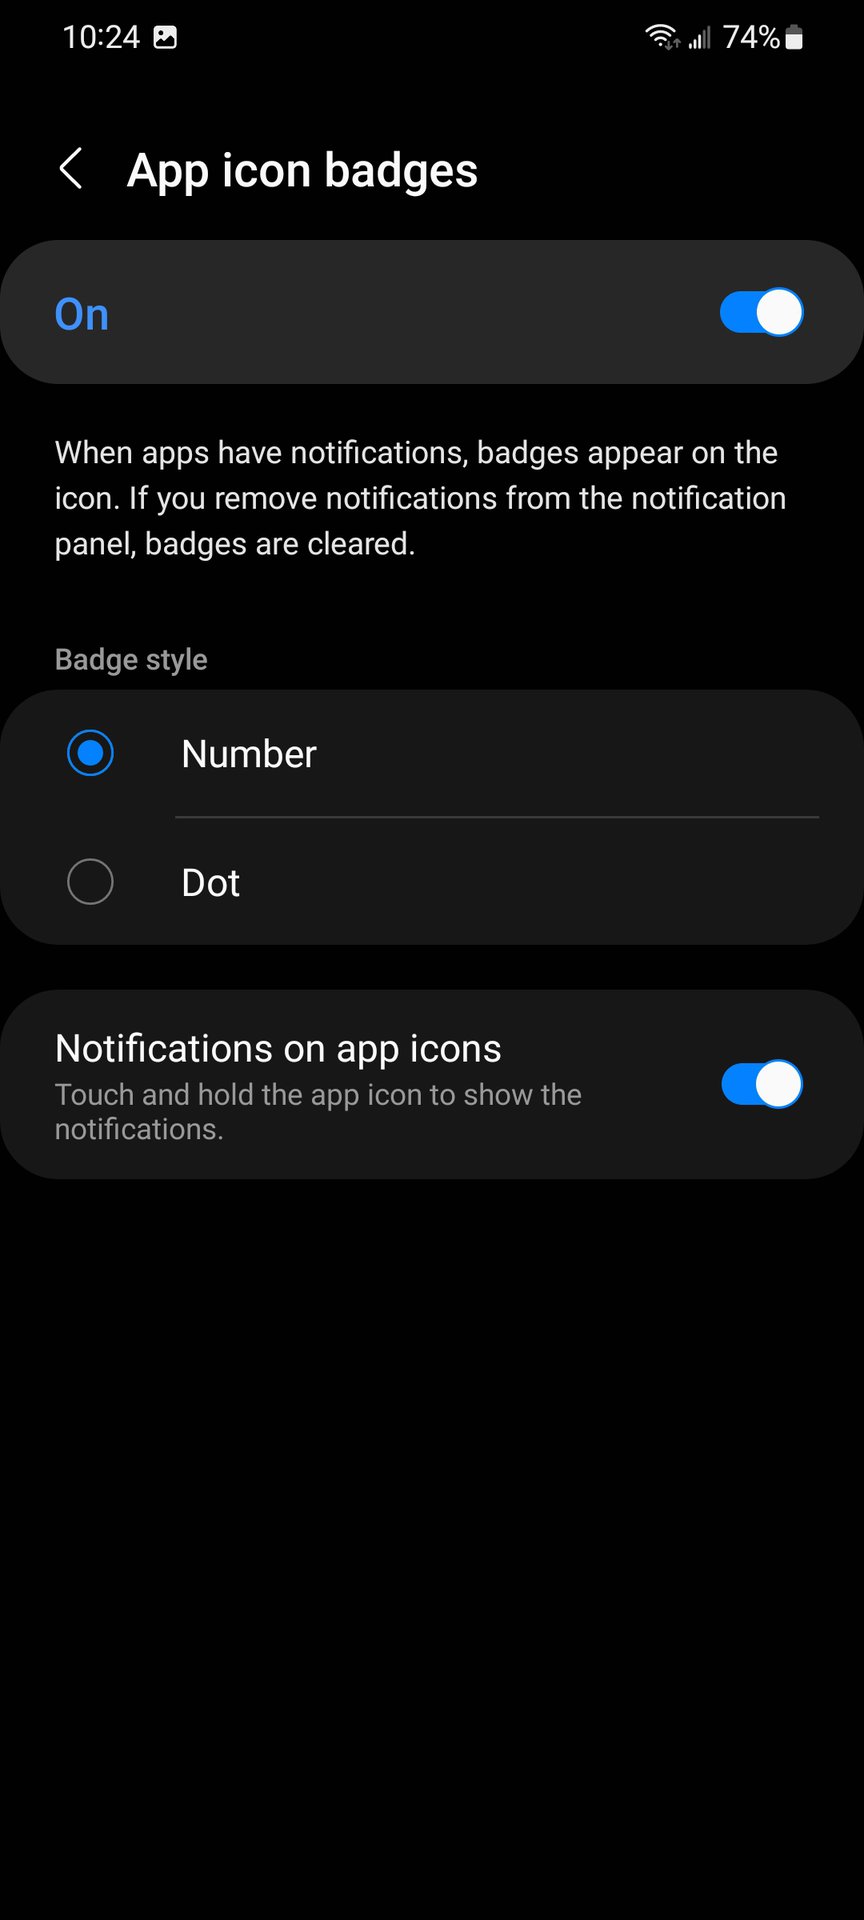 app icon badge options